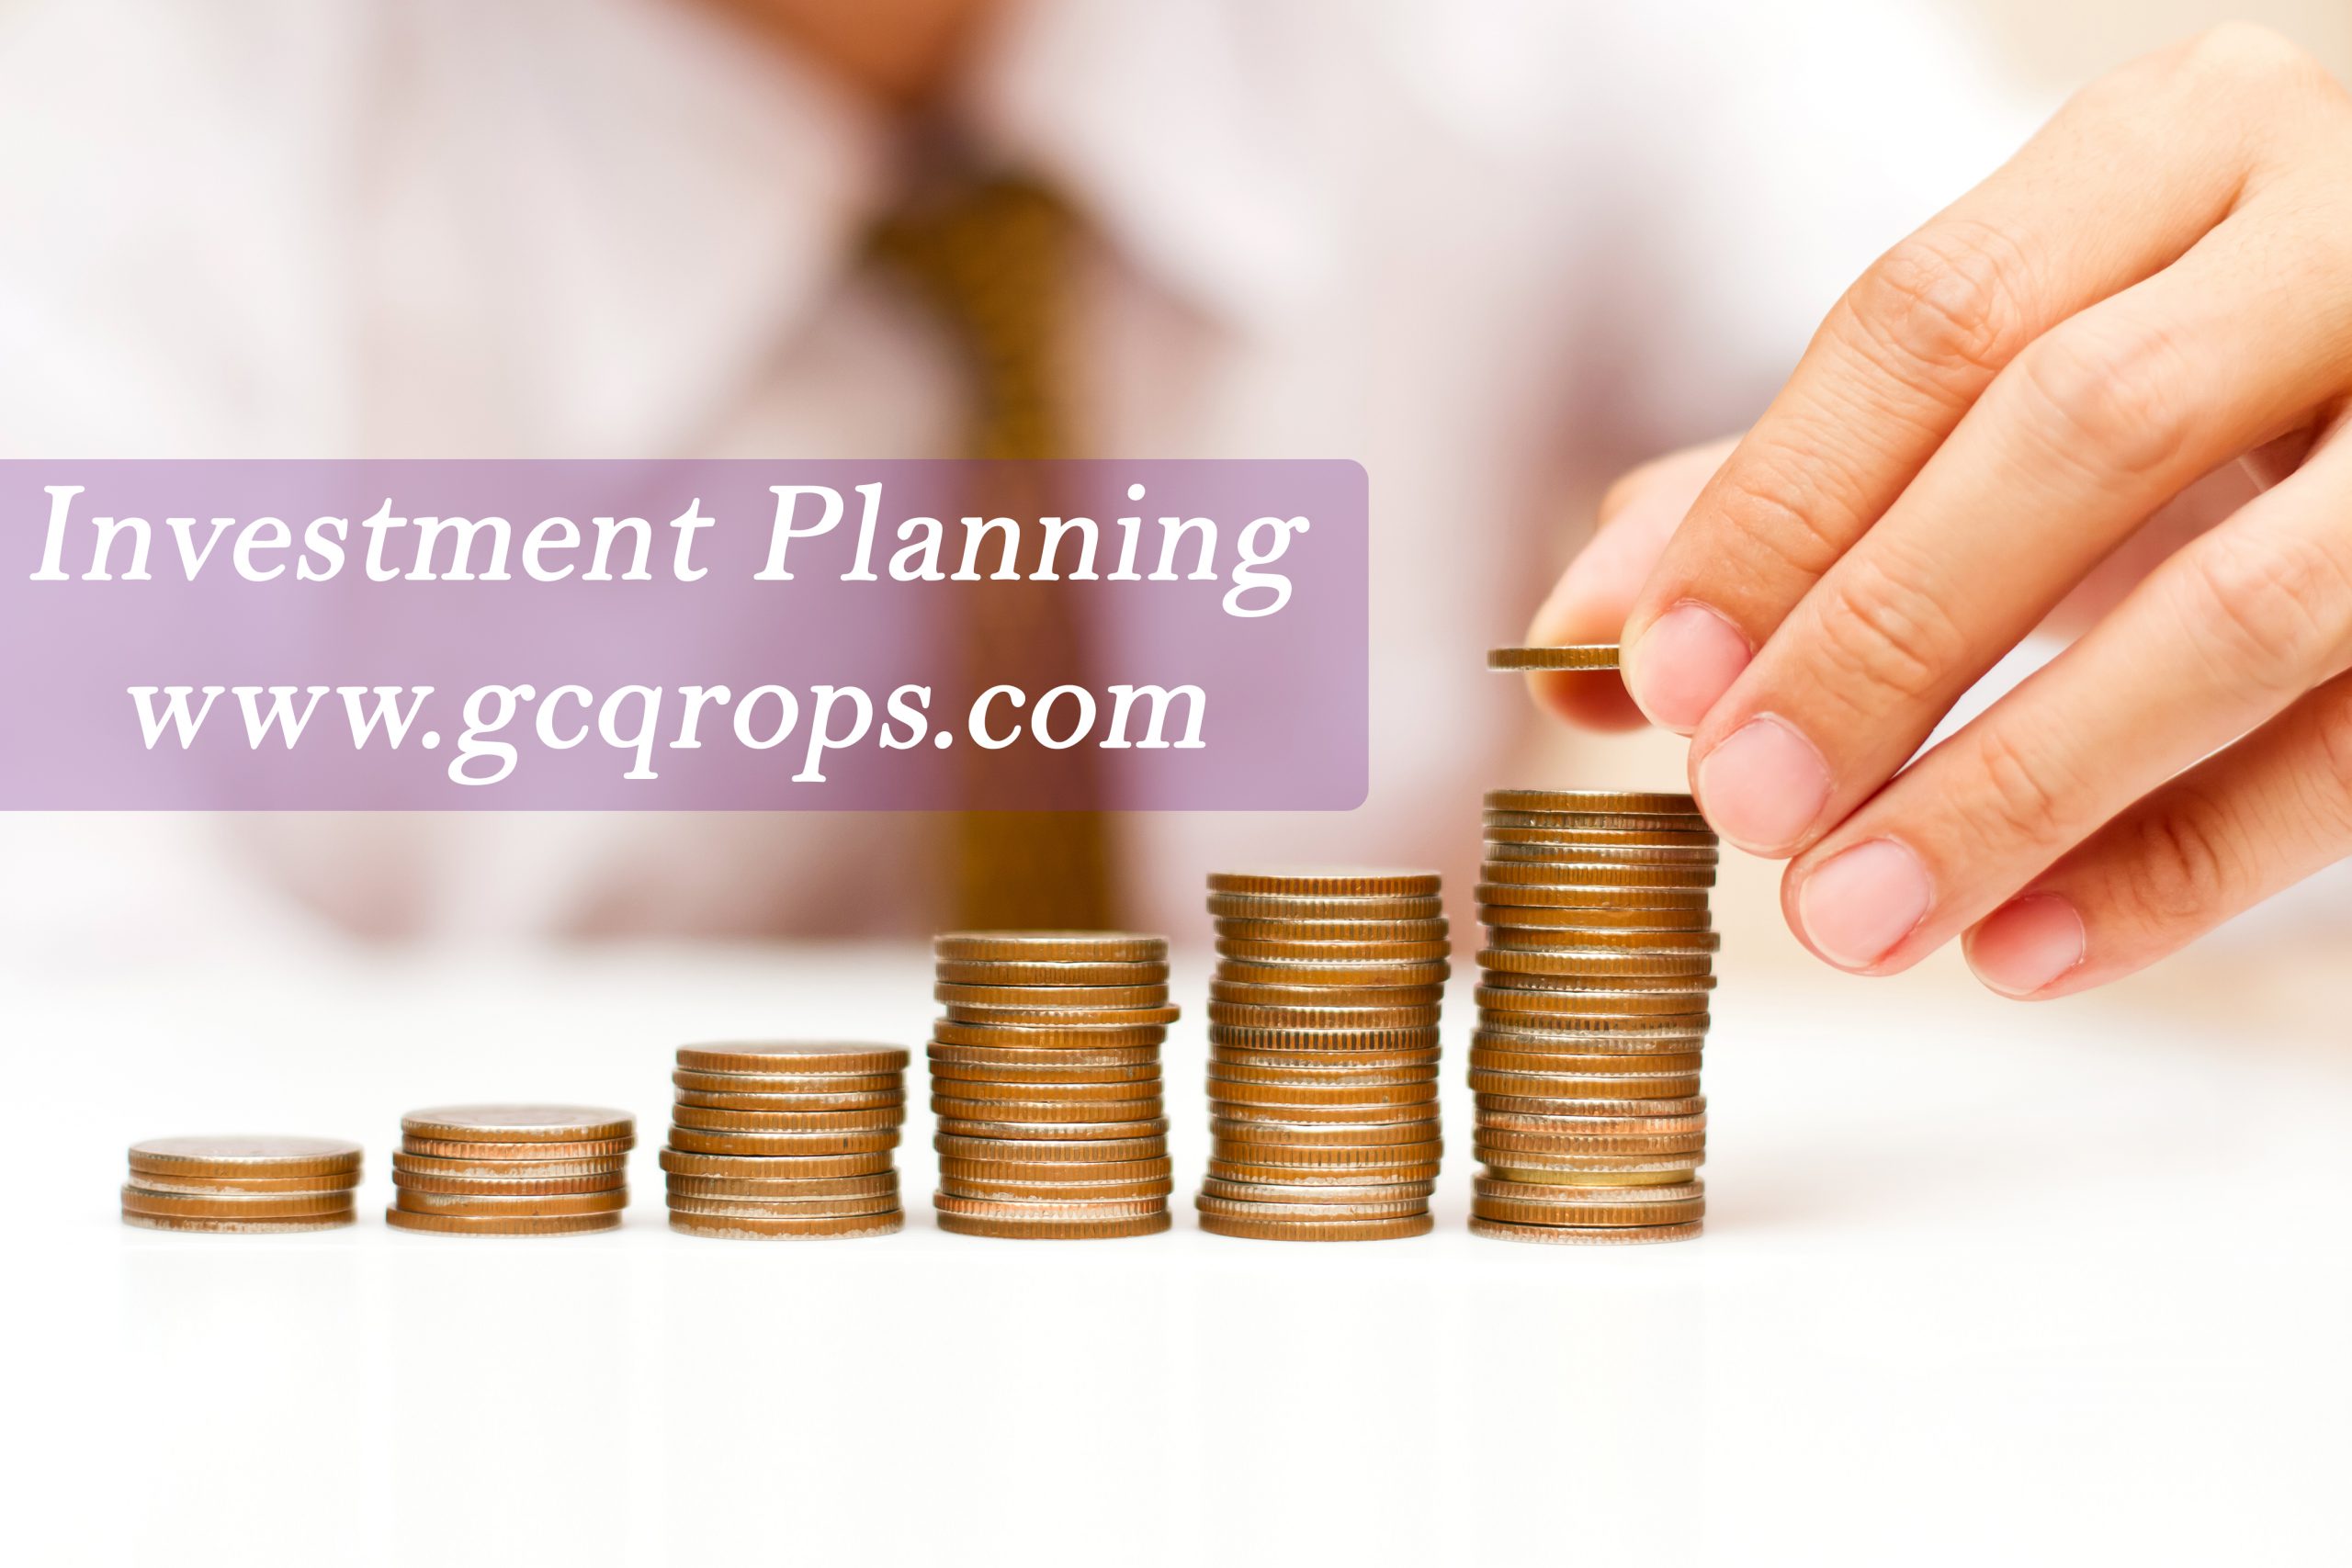 Investment planning